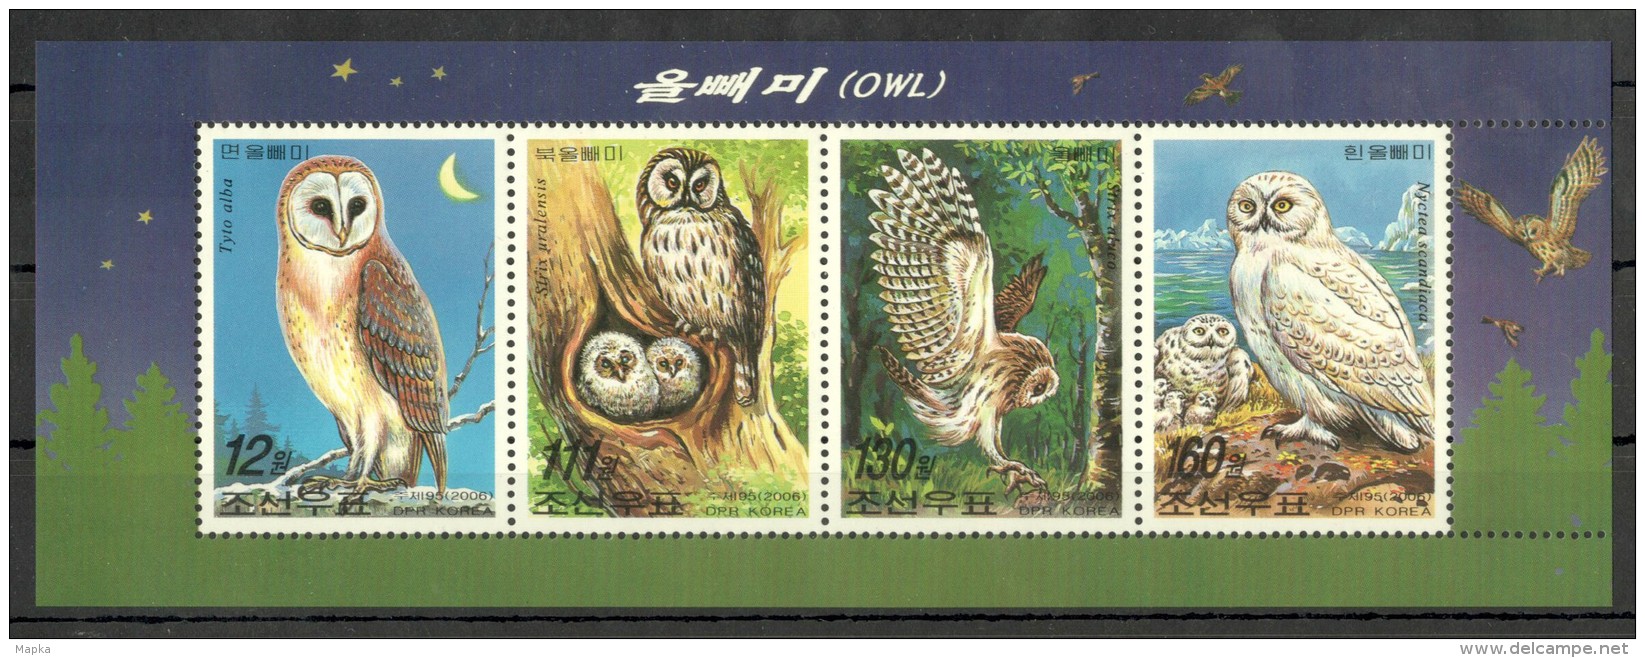 UU139 2006 DPR KOREA FAUNA BIRDS OWLS 1KB MNH - Eulenvögel